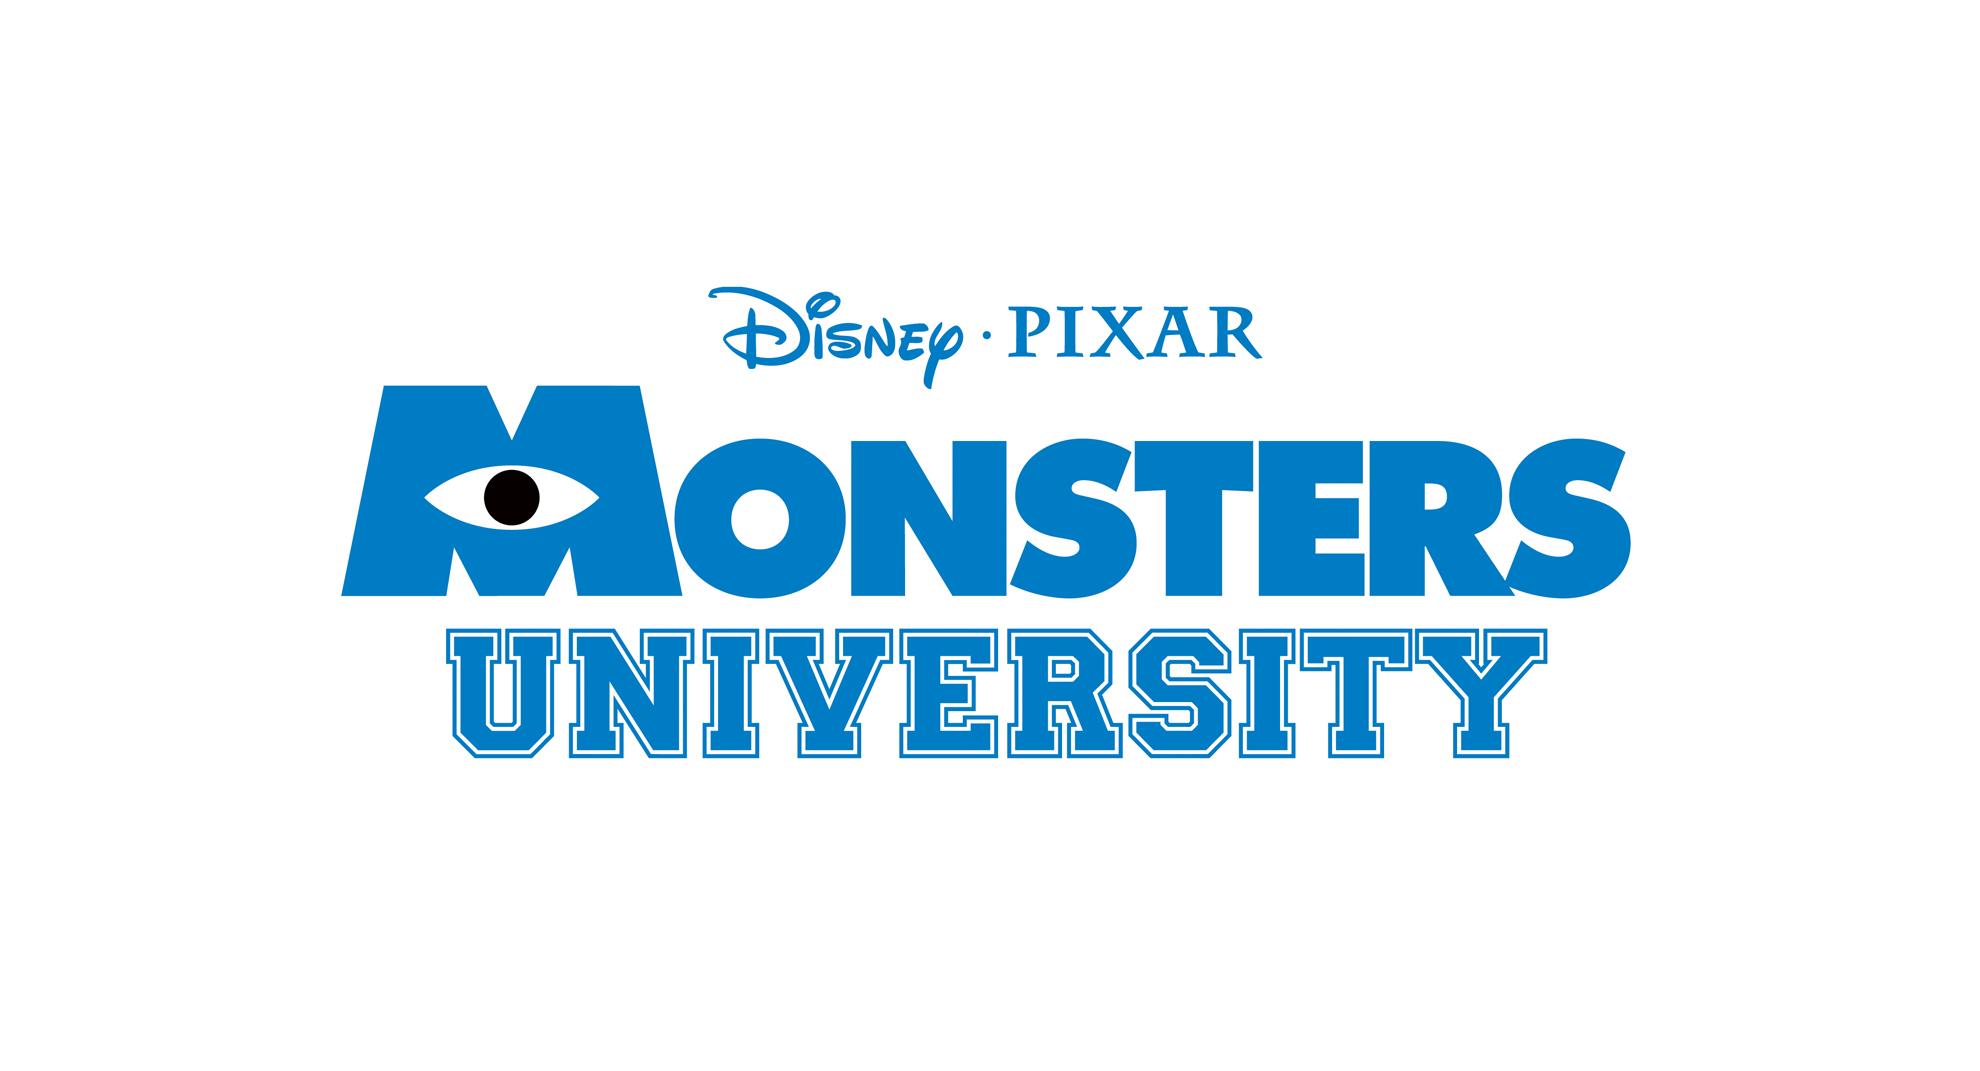 Disney Pixar Monsters University Logo - Official: Monsters University Logo Unveiled! | Pixar Talk